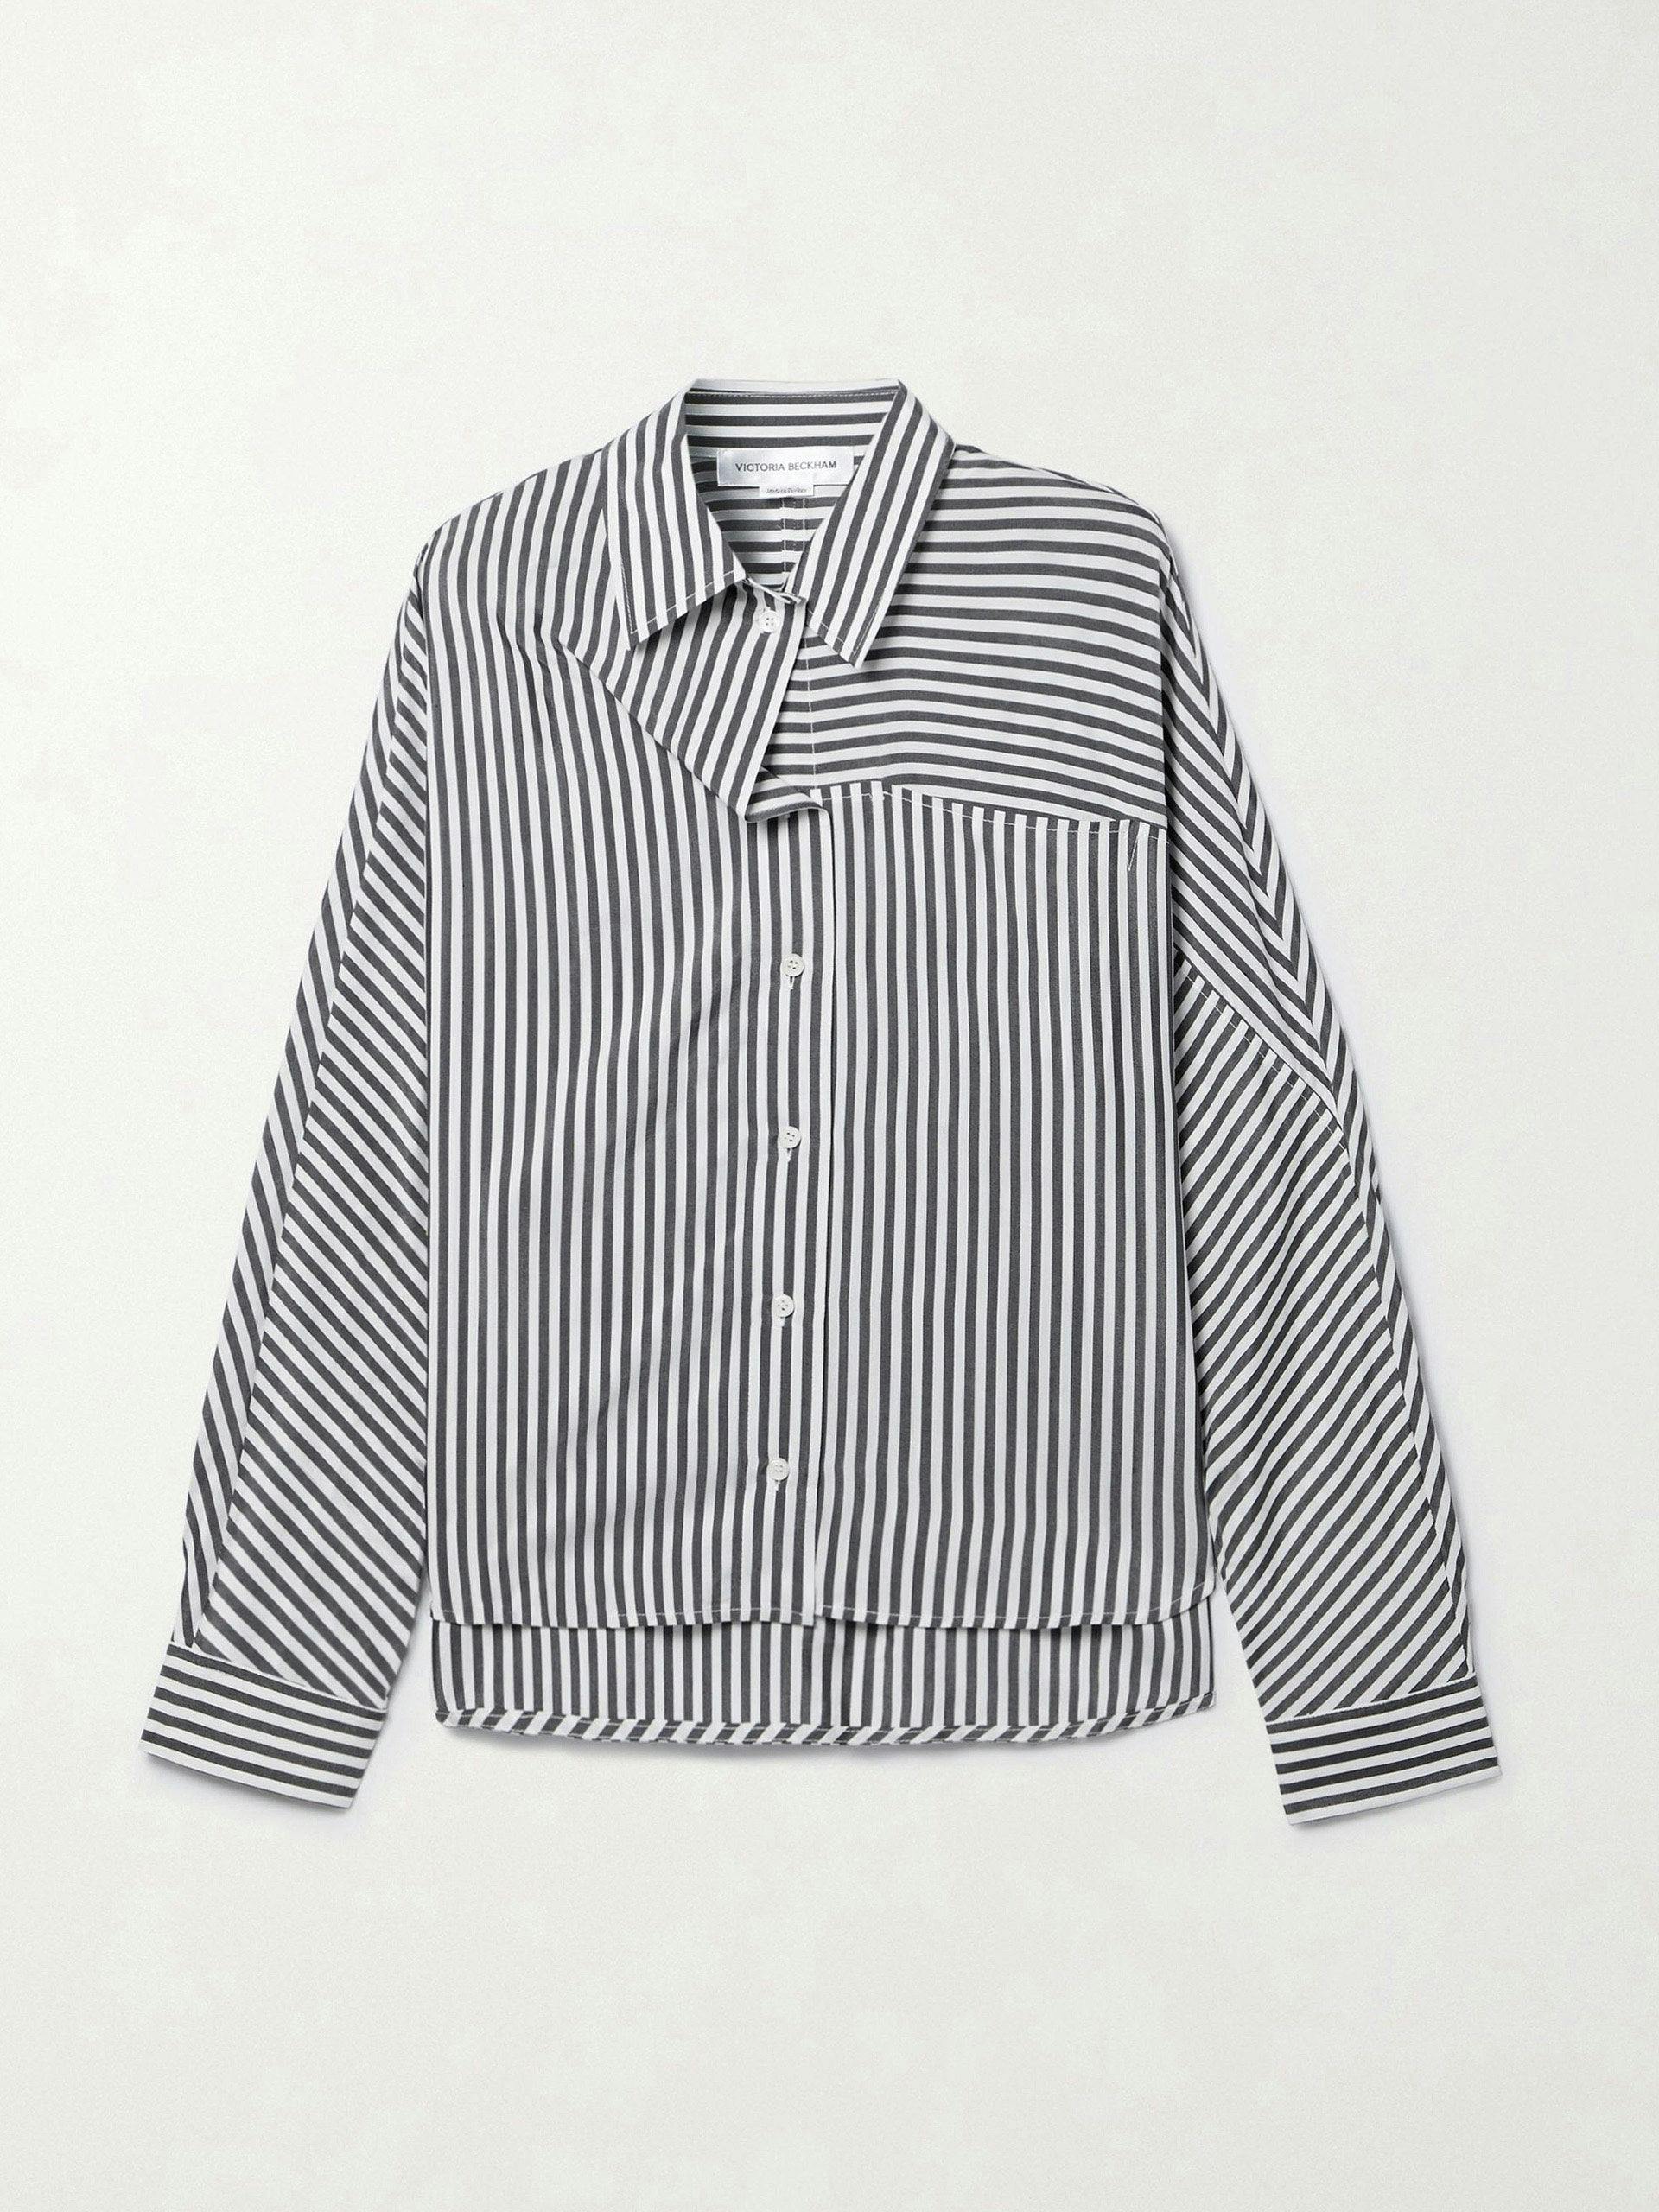 Charcoal striped poplin shirt